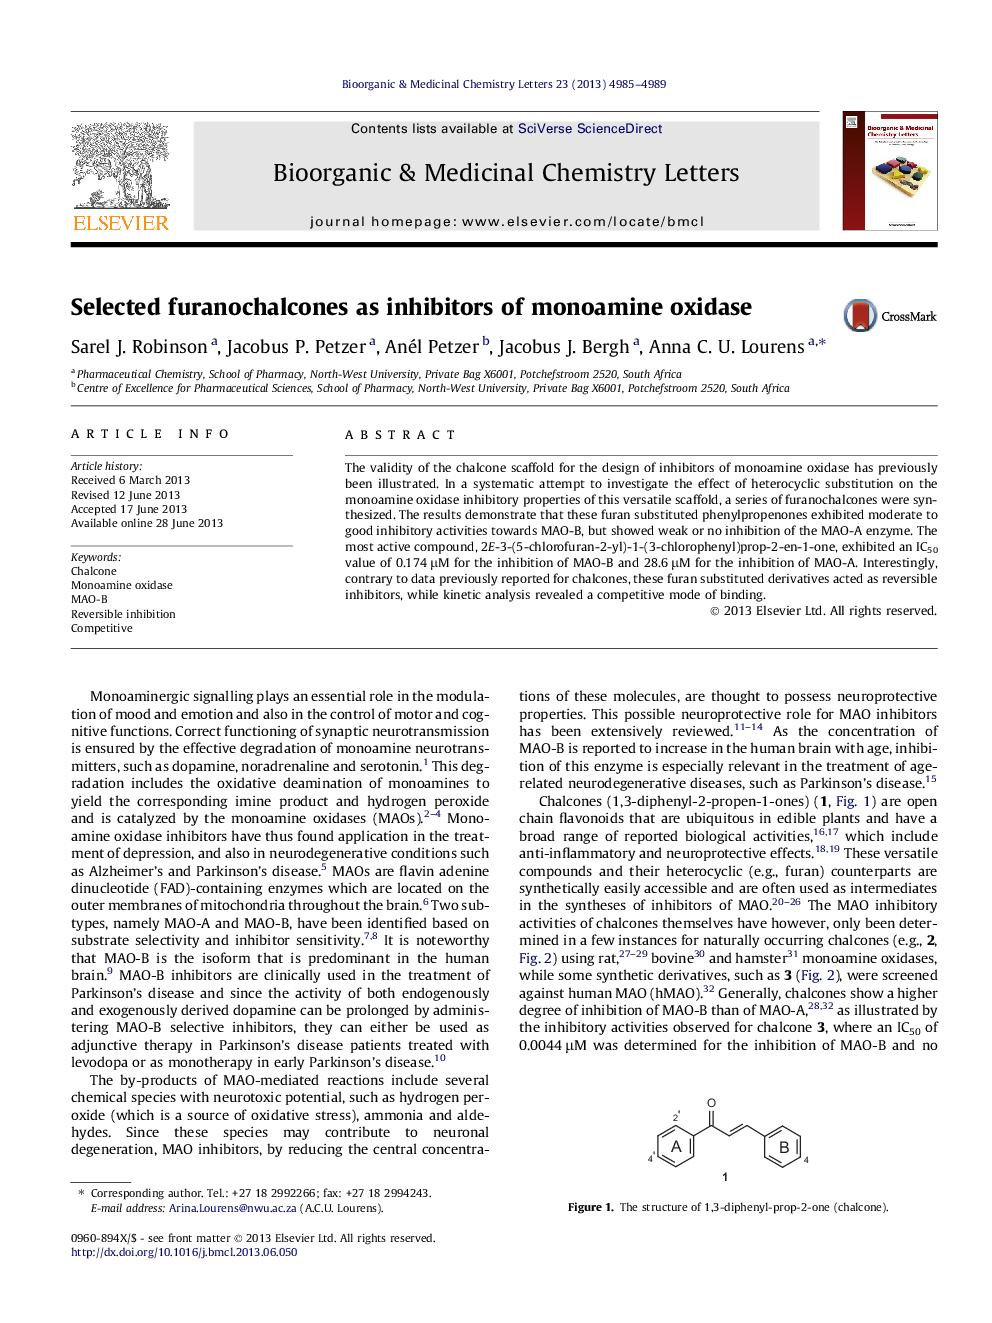 Selected furanochalcones as inhibitors of monoamine oxidase